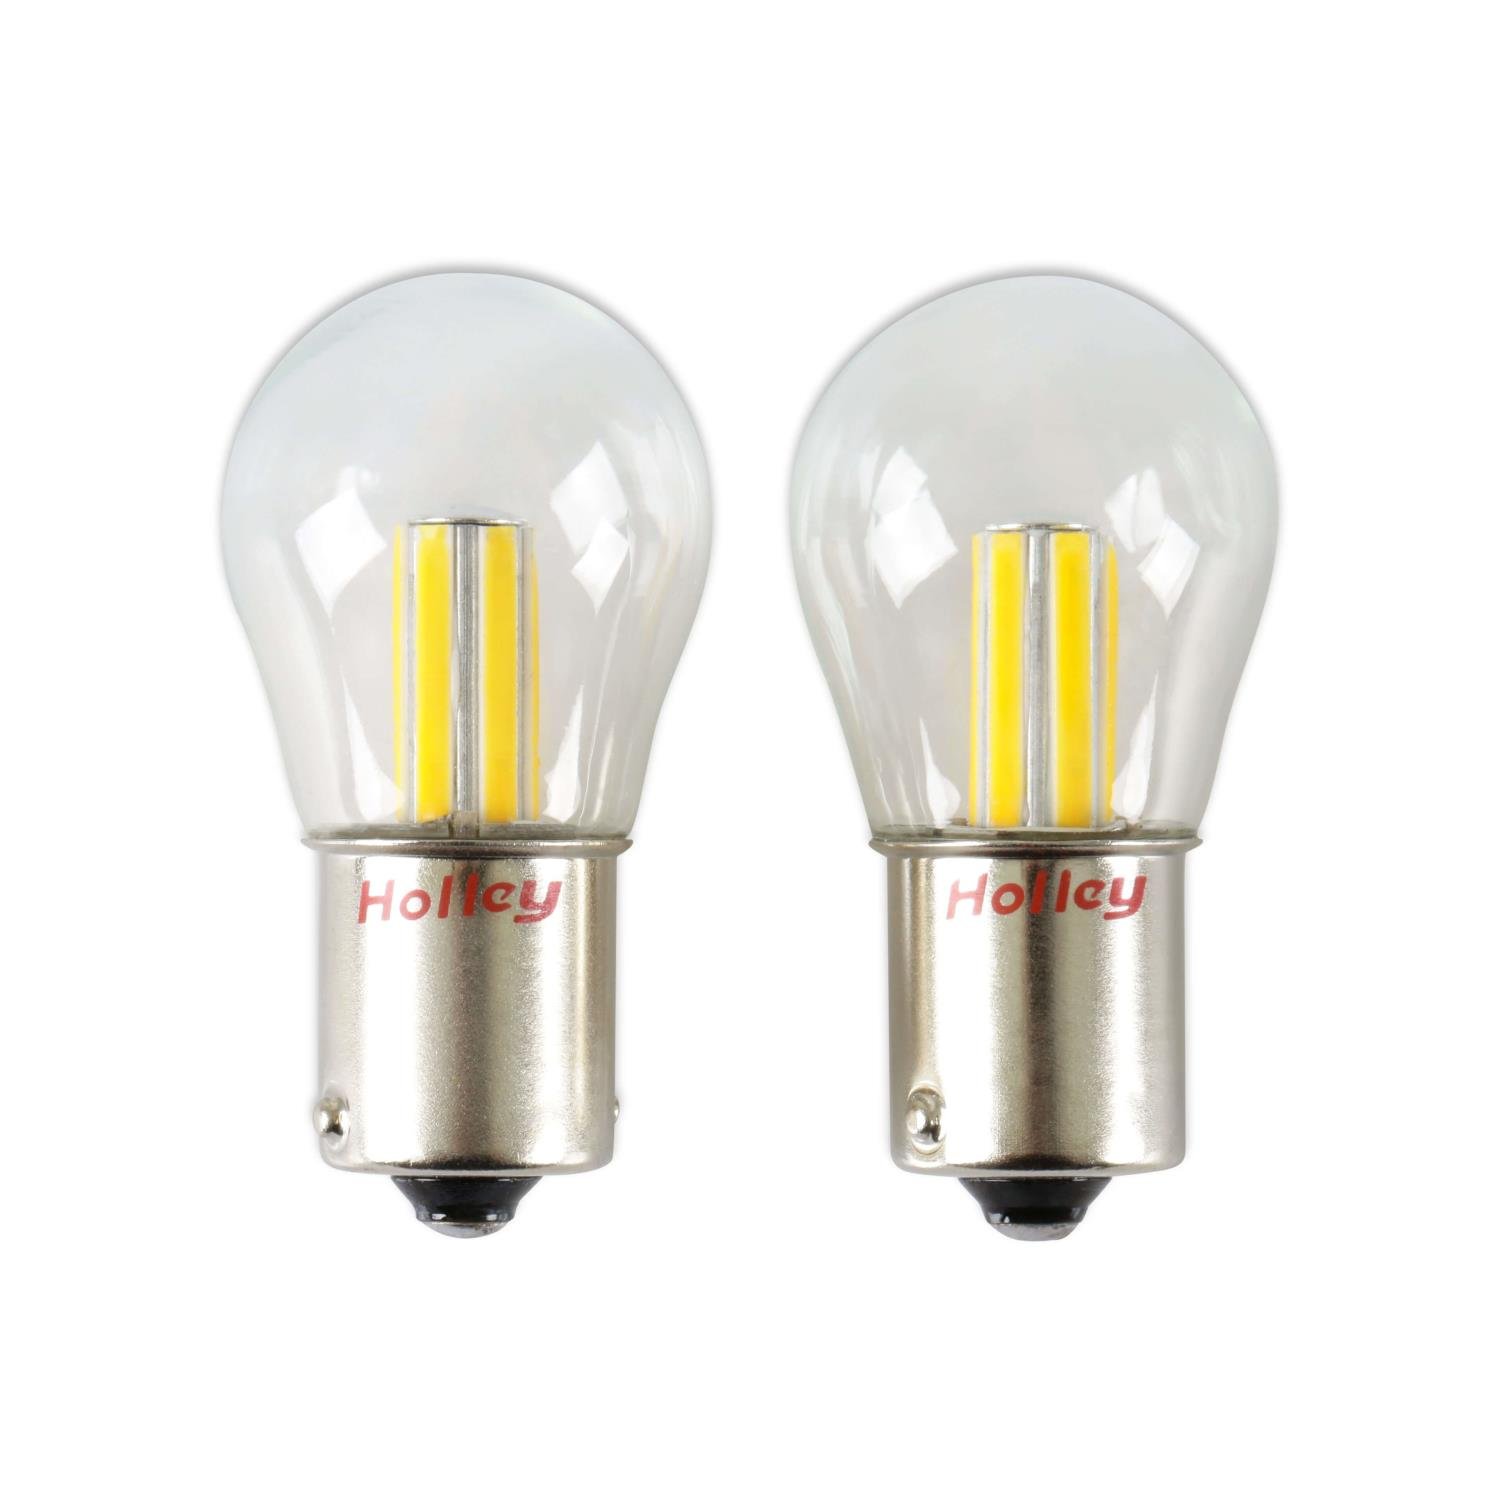 RetroBright LED 1156 Turn Signal / Parking Light Bulbs [Classic White]